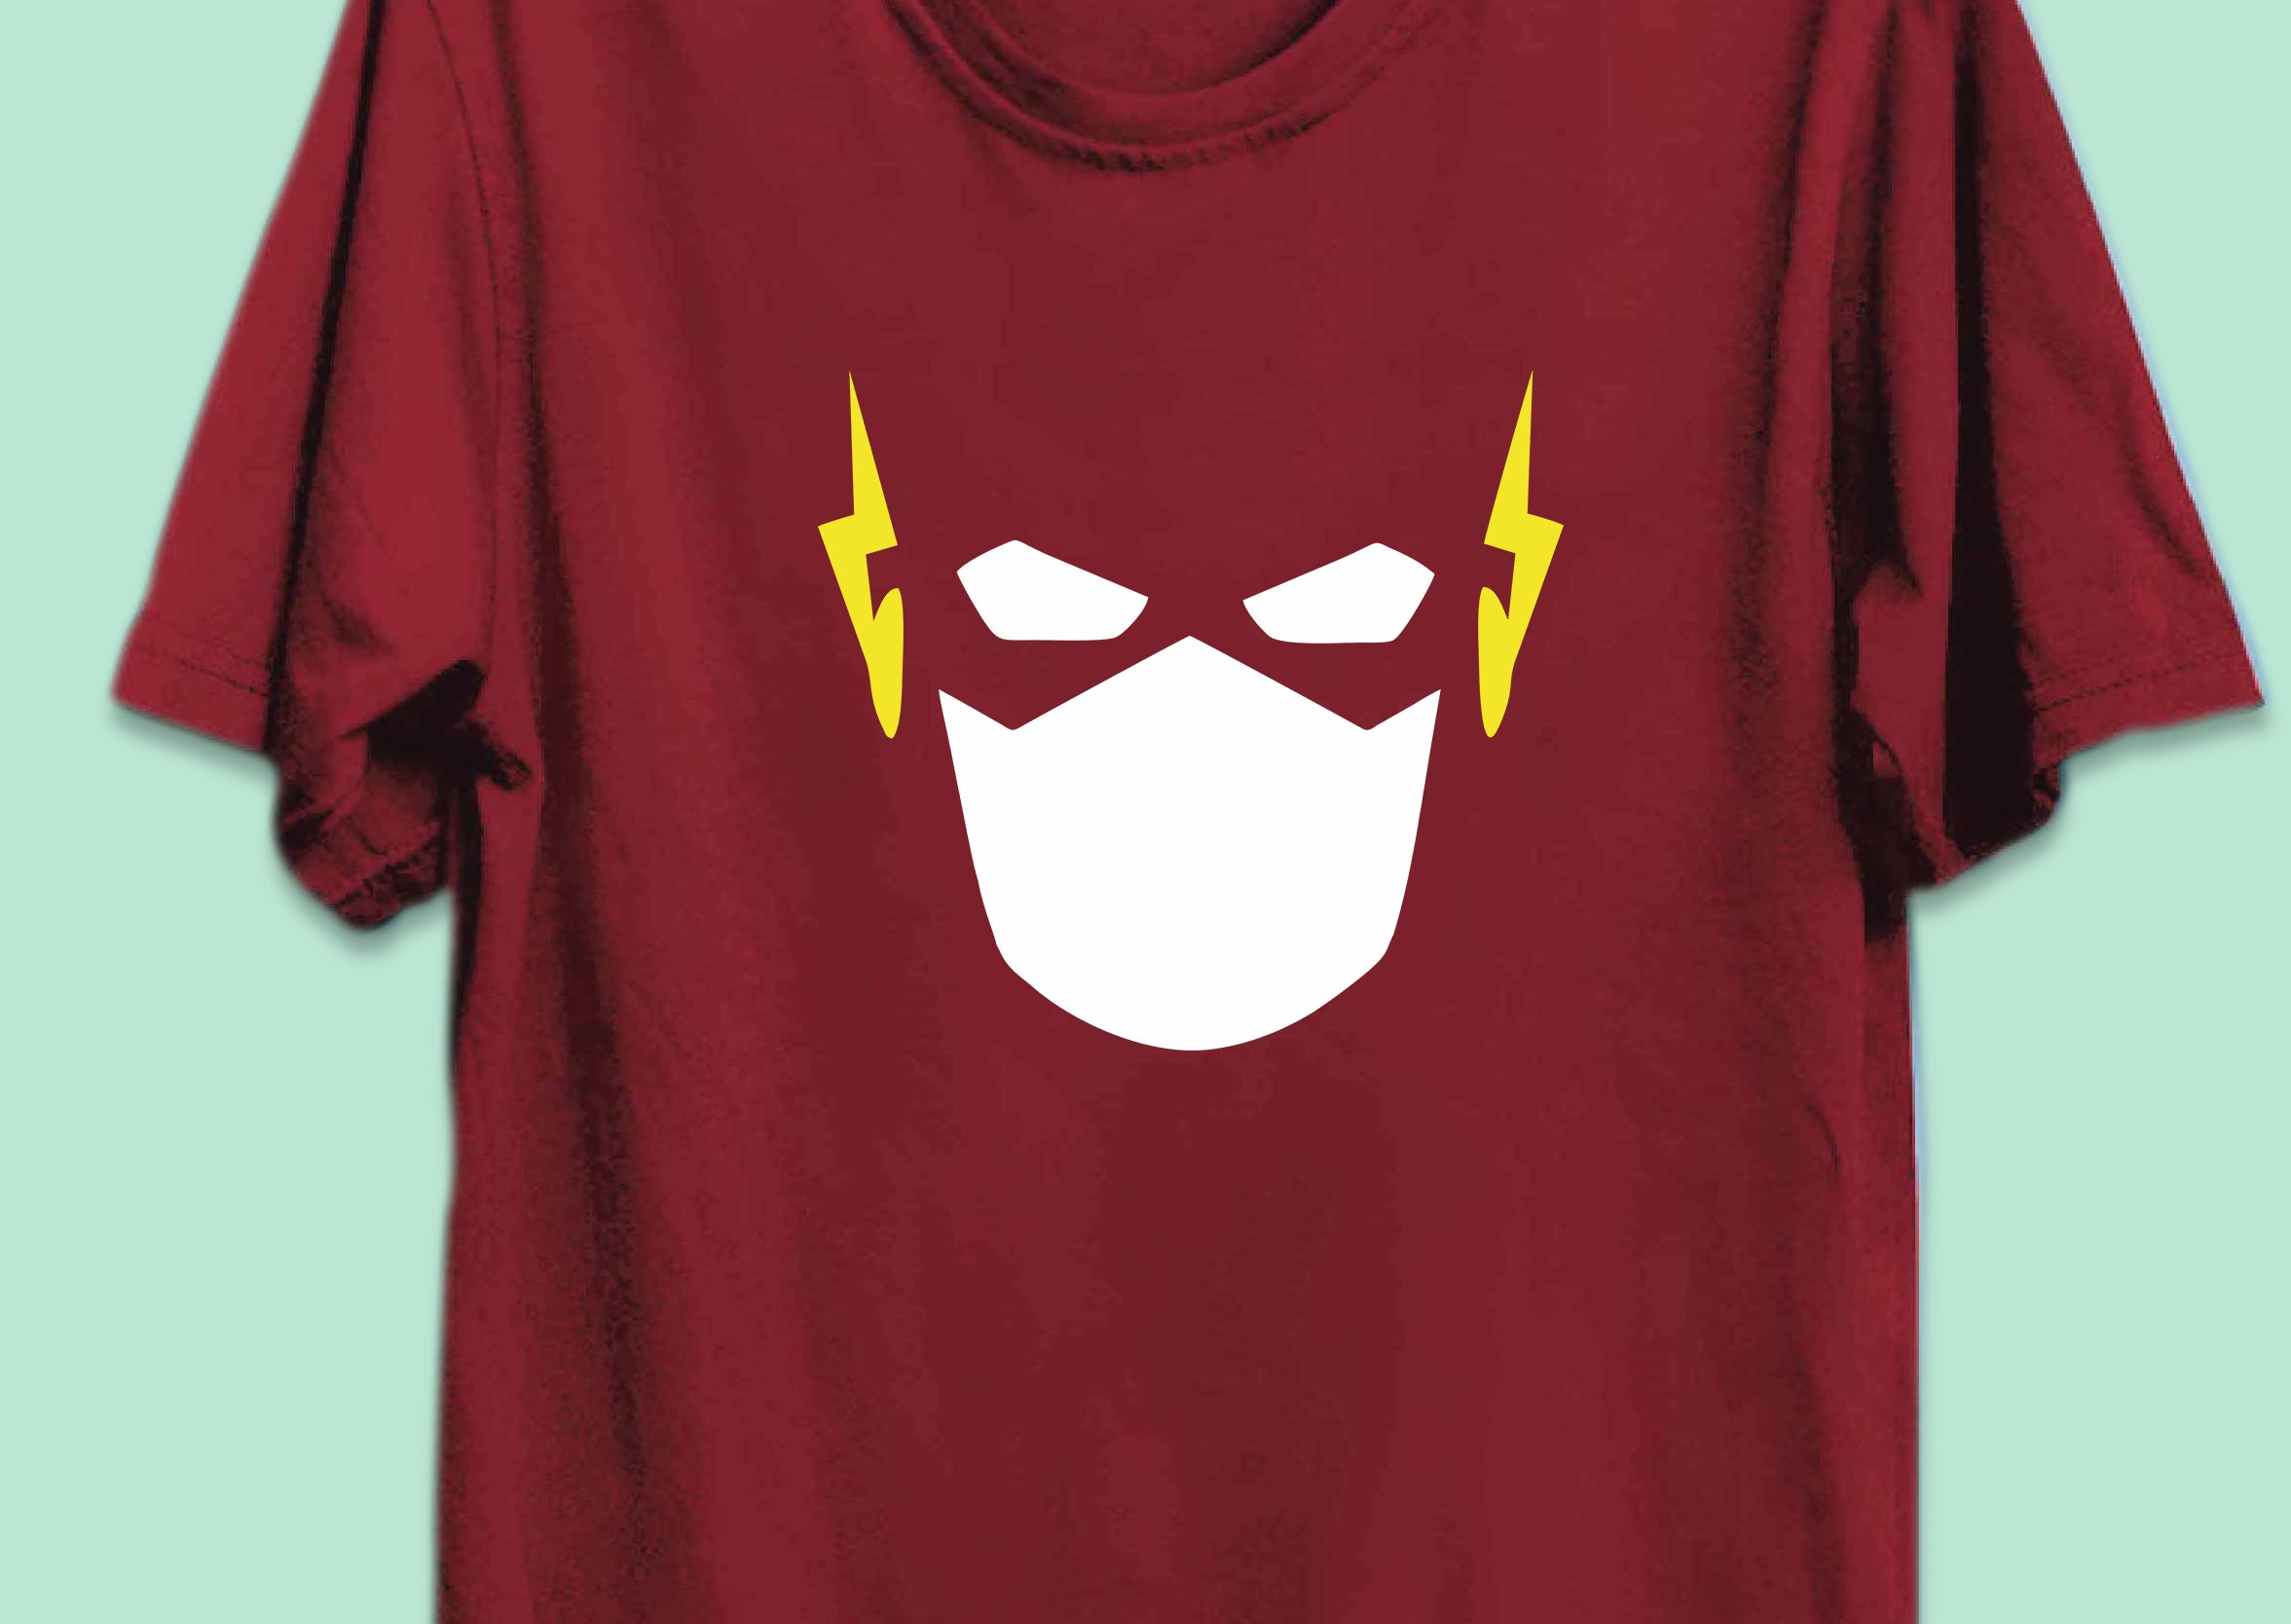 The Flash Minimal Reactr Tshirts For Men - Eyewearlabs